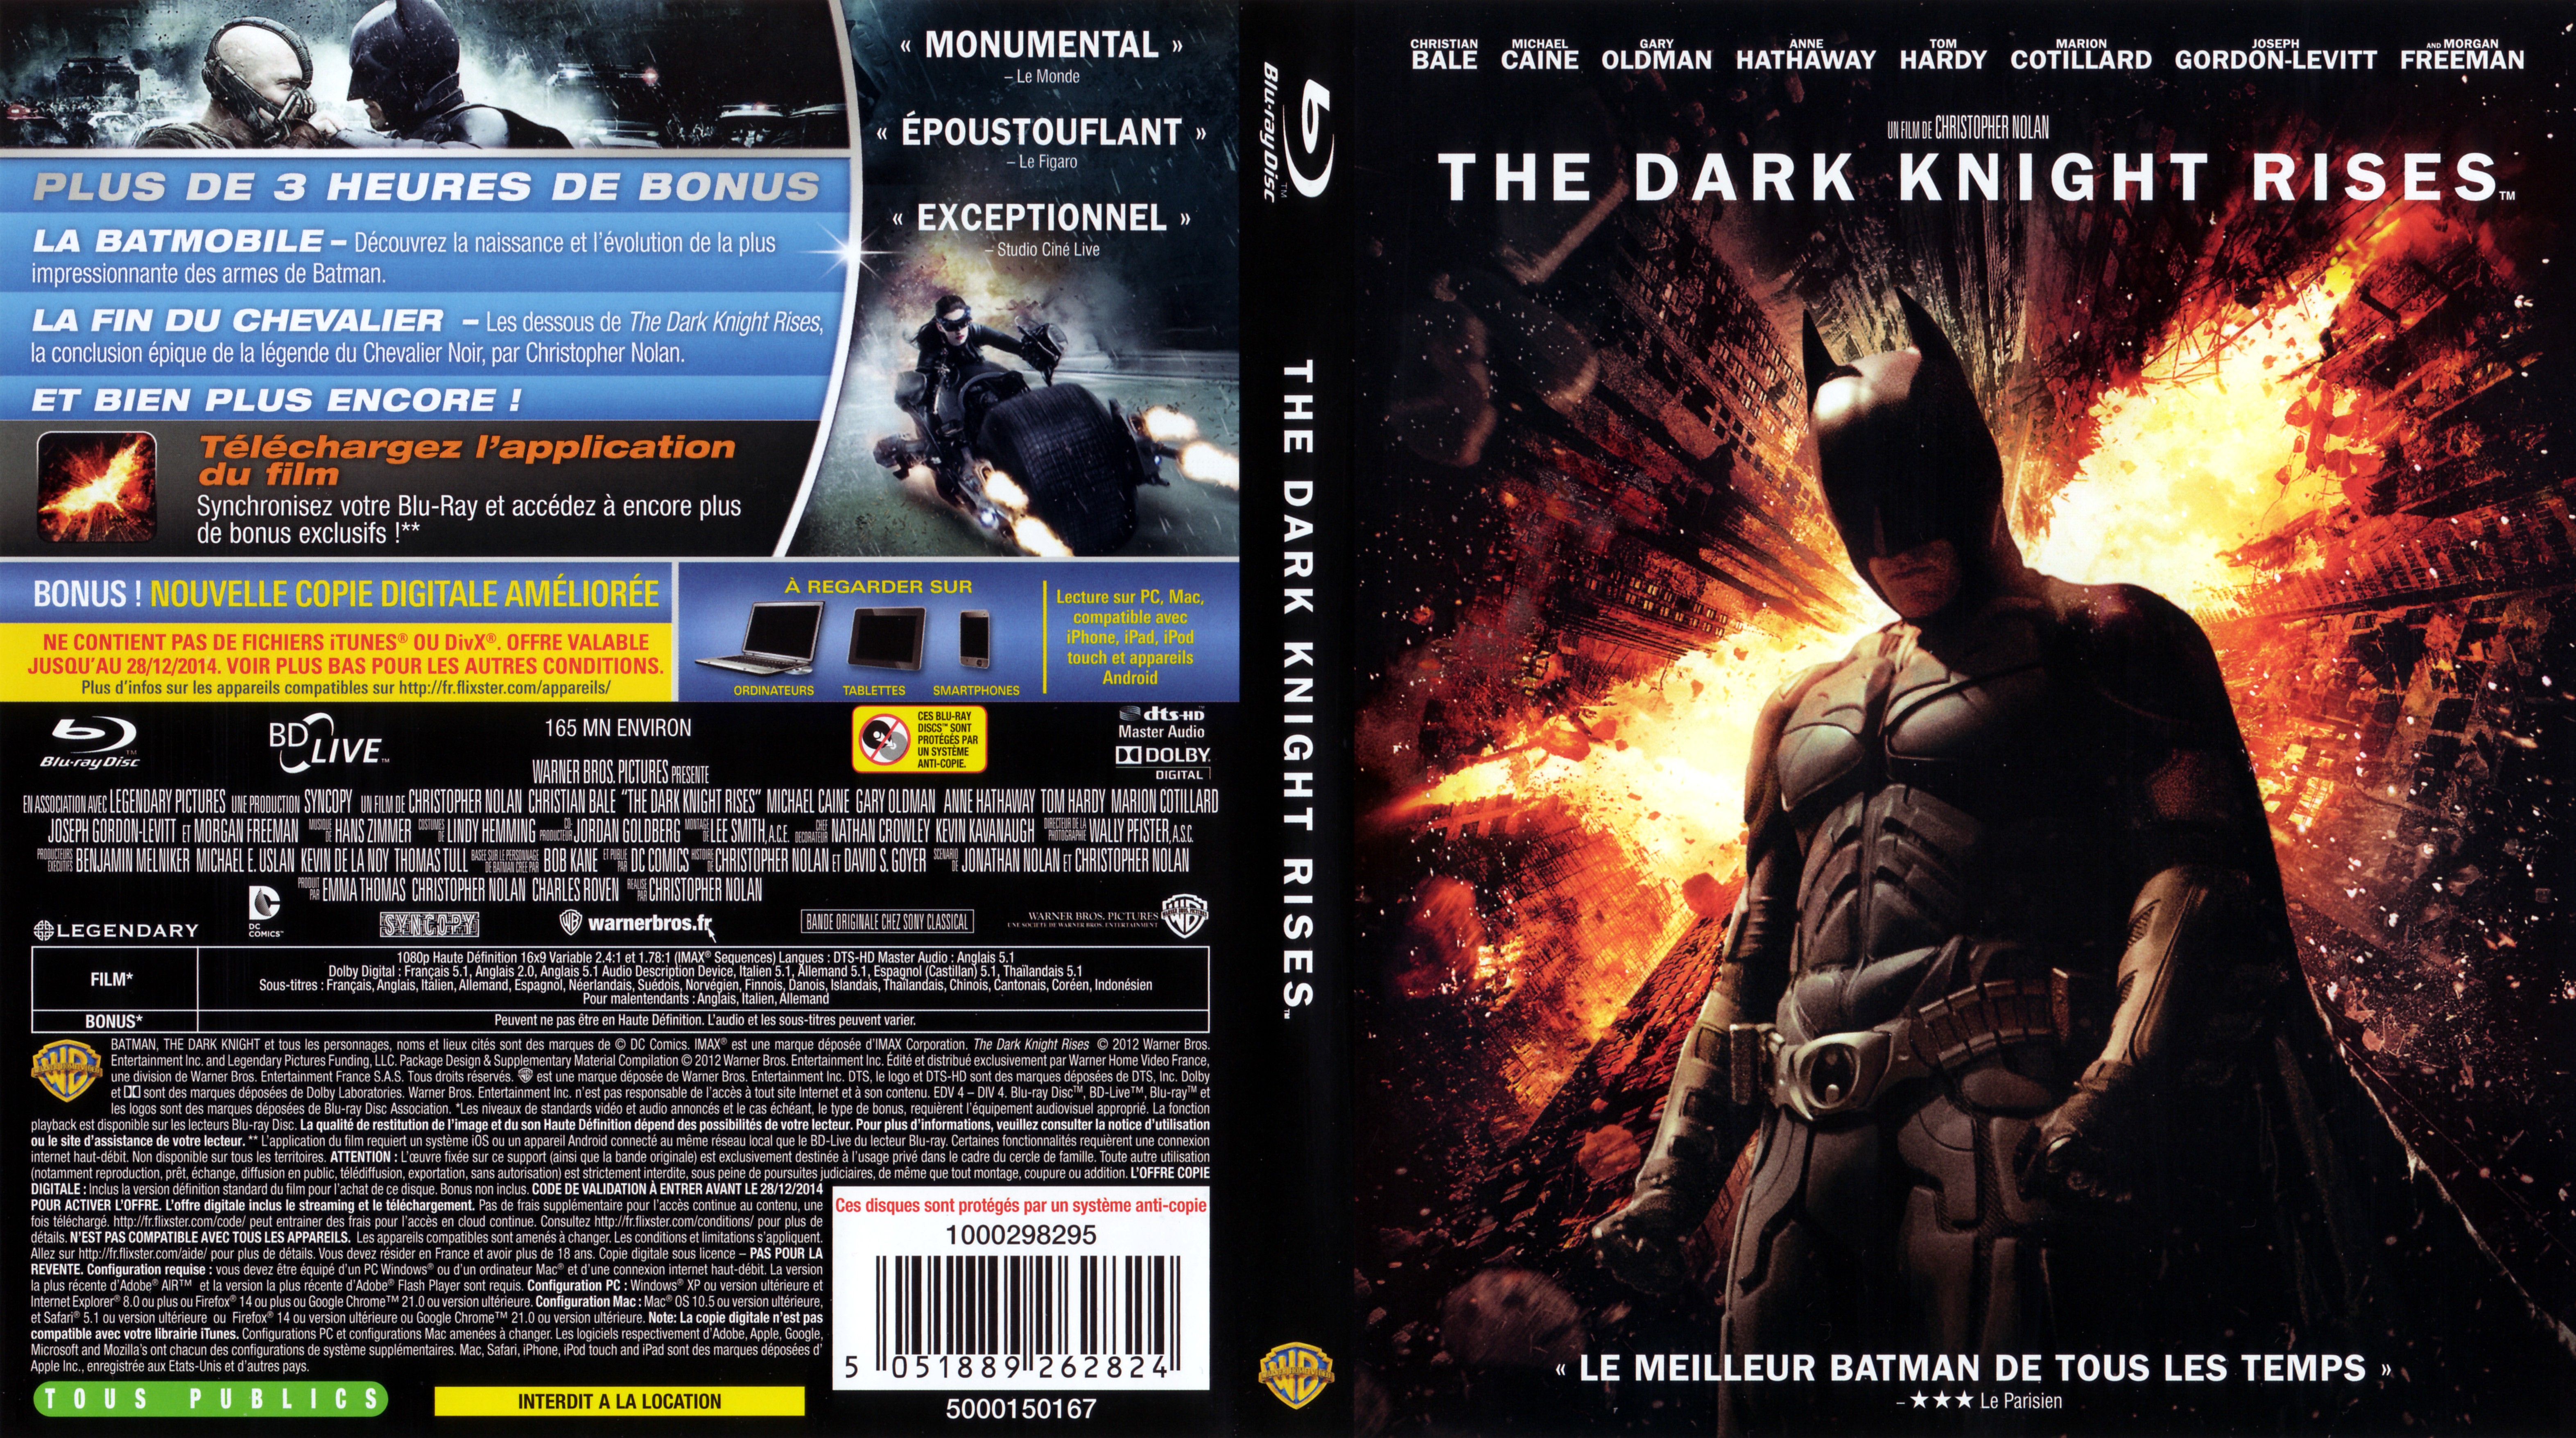 Jaquette DVD The dark knight rises (BLU-RAY) v4